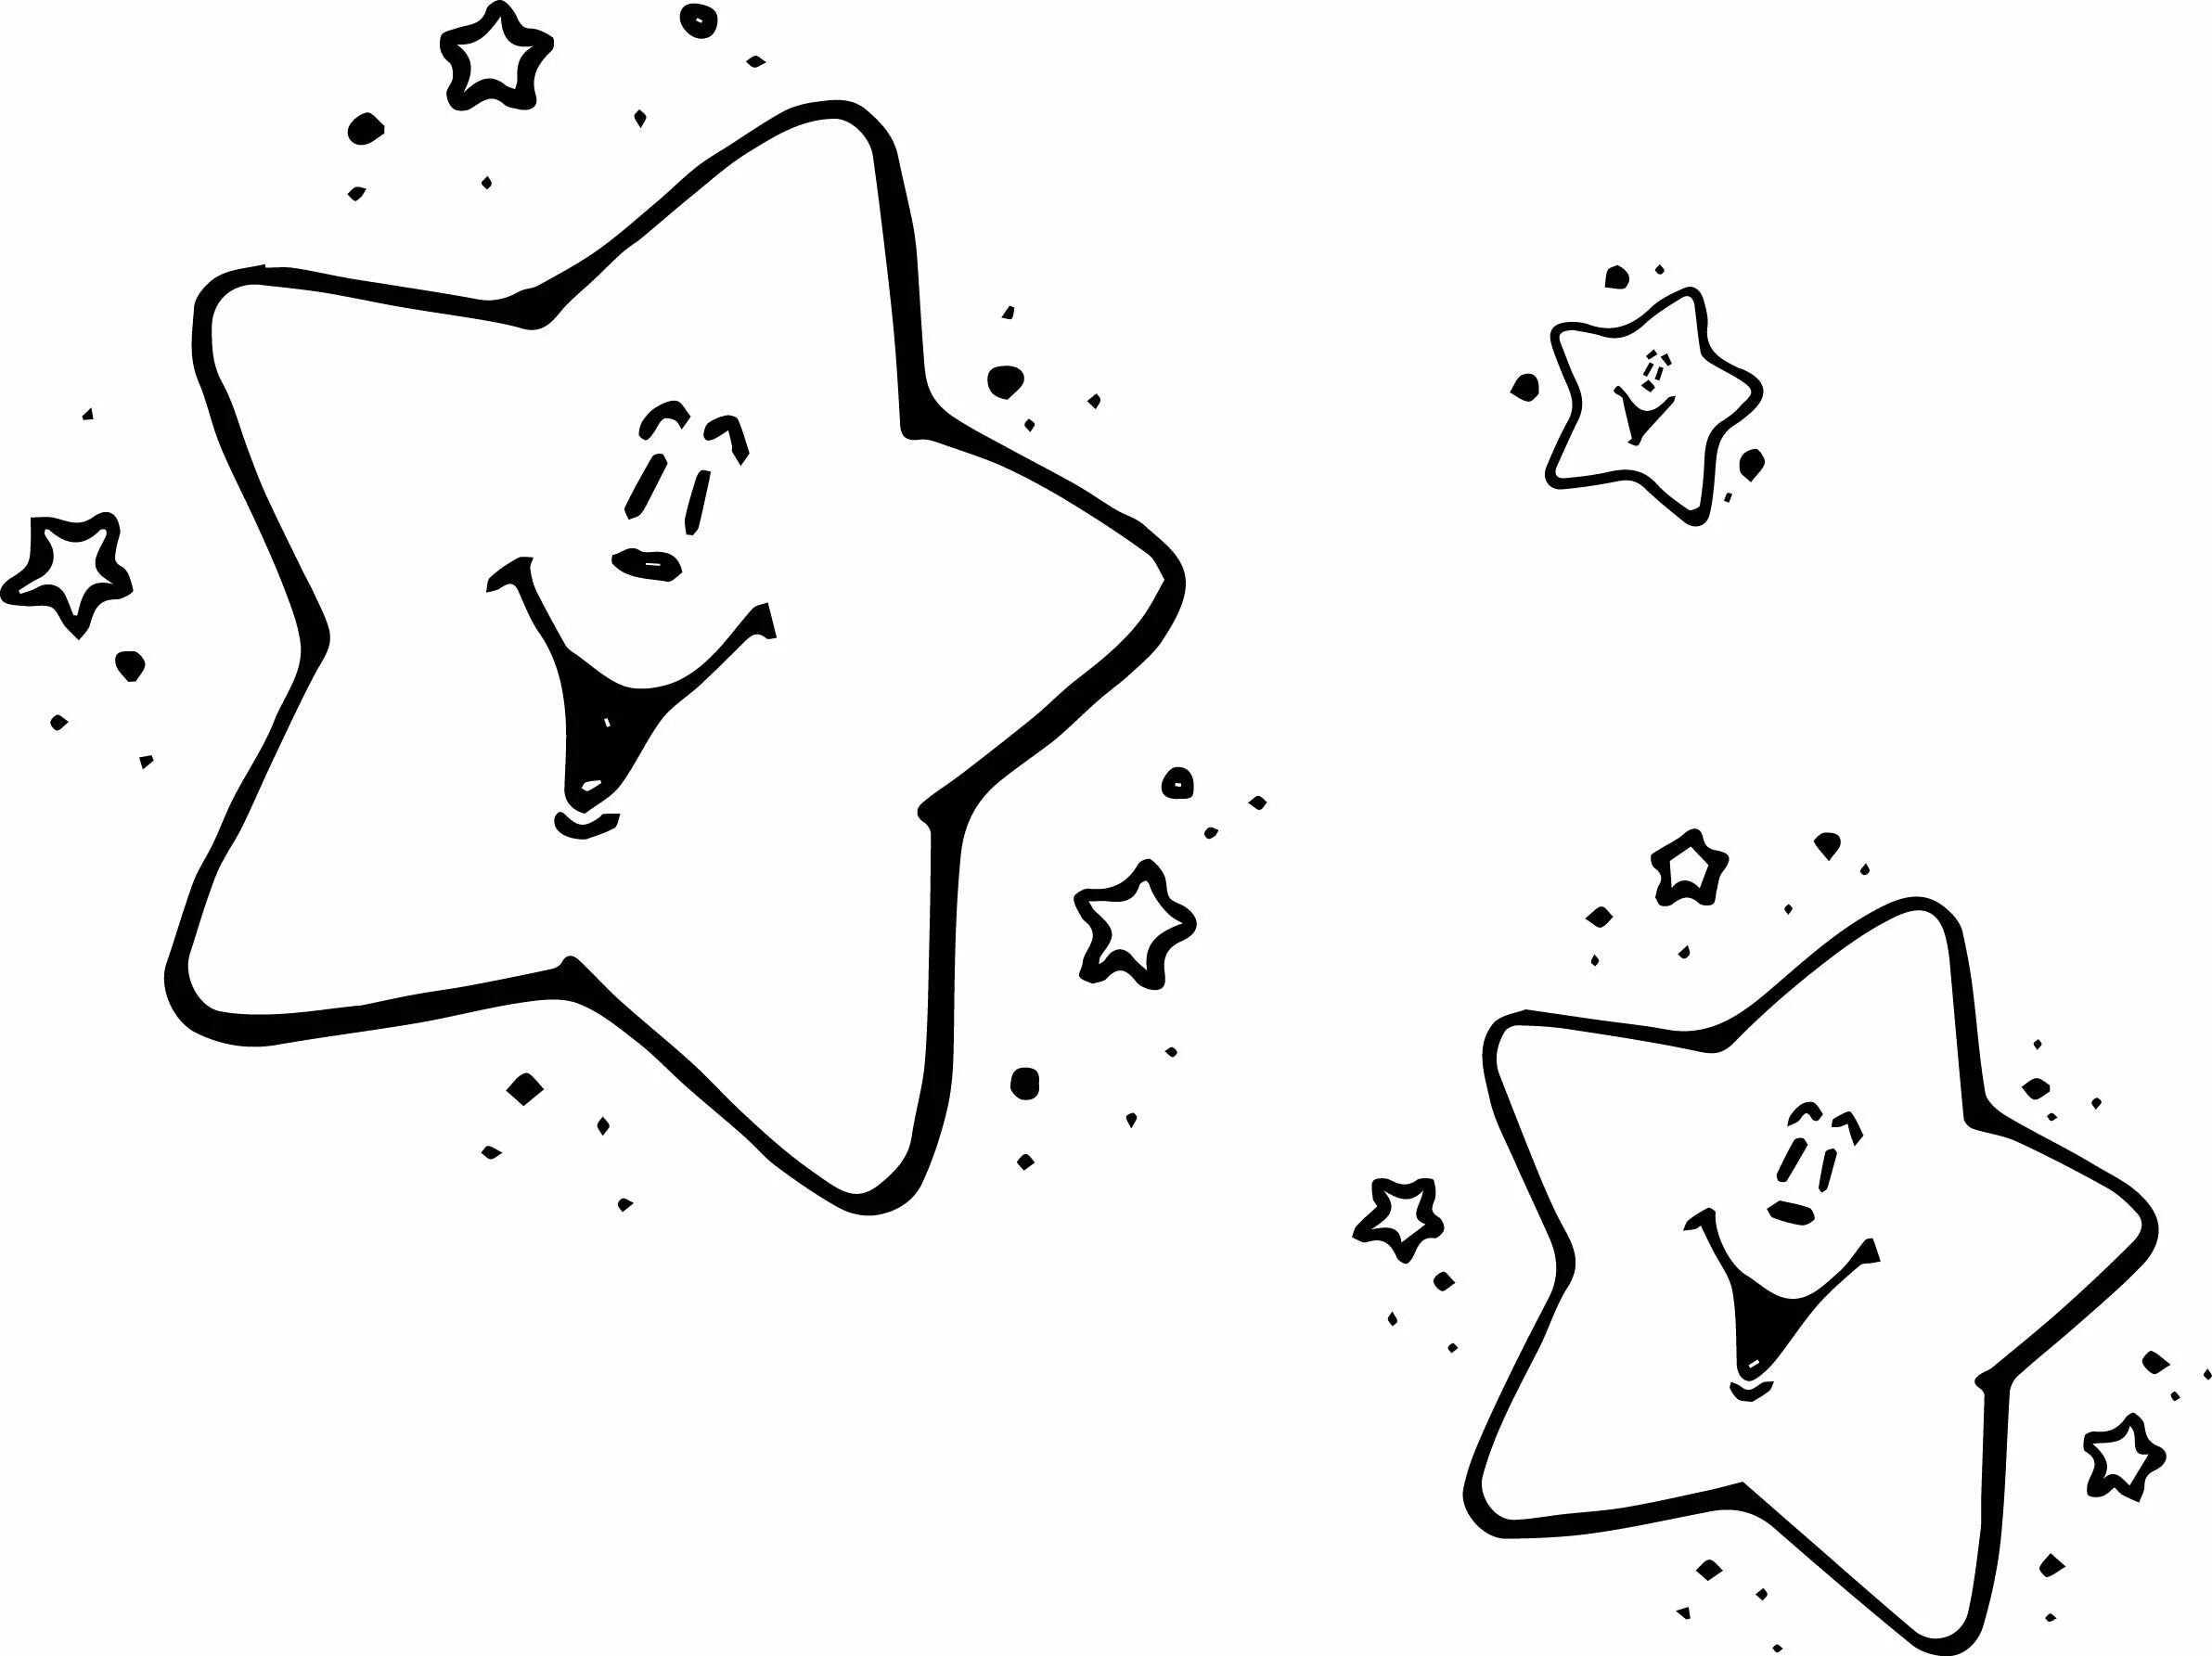 Star pattern #1